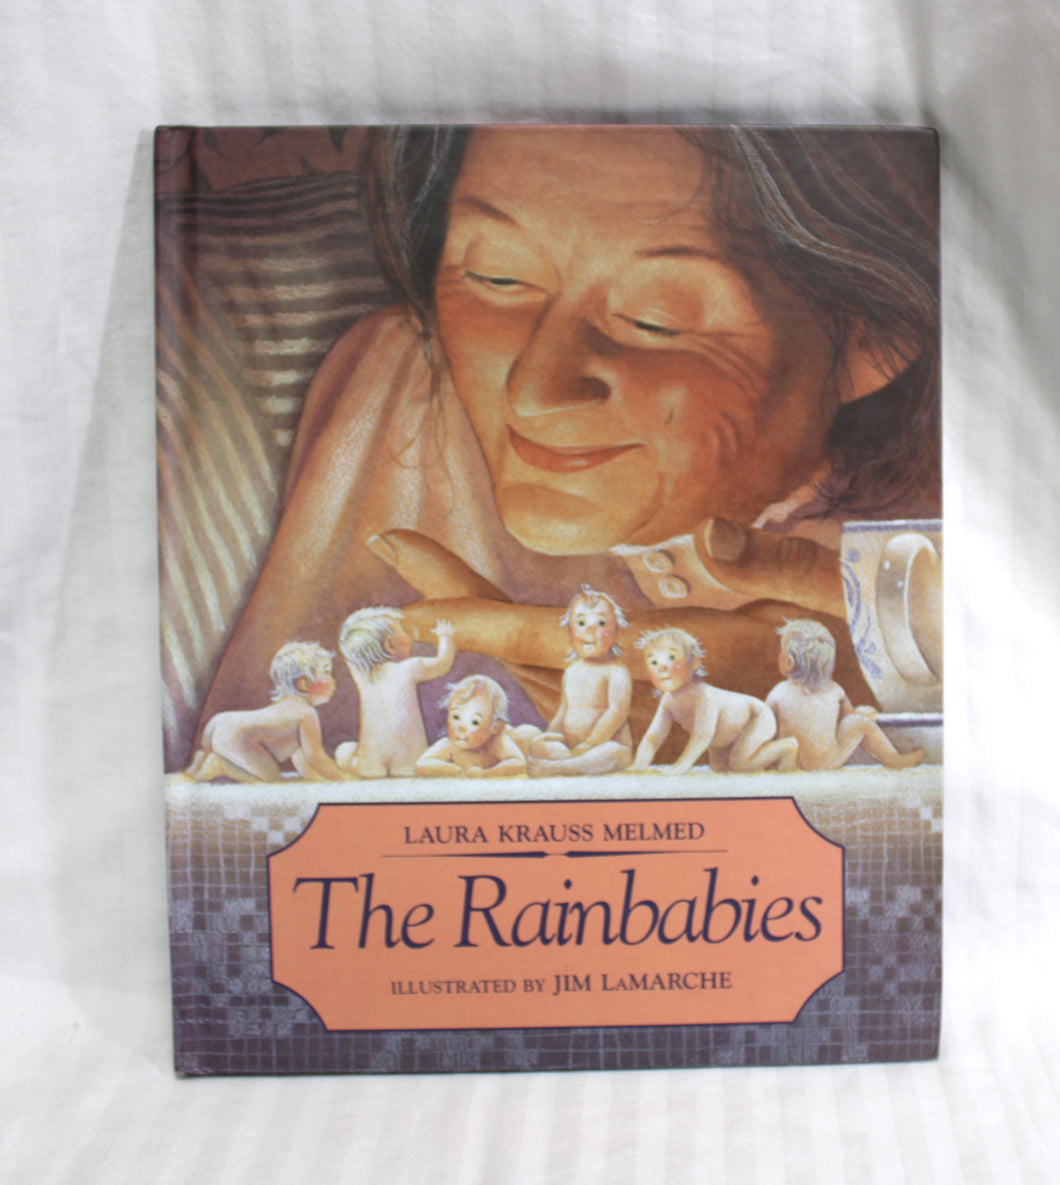 Vintage - The Rainbabies - Laura Krauss Melmed, Illustrated by Jim LaMarche 1992 - Hardback Book